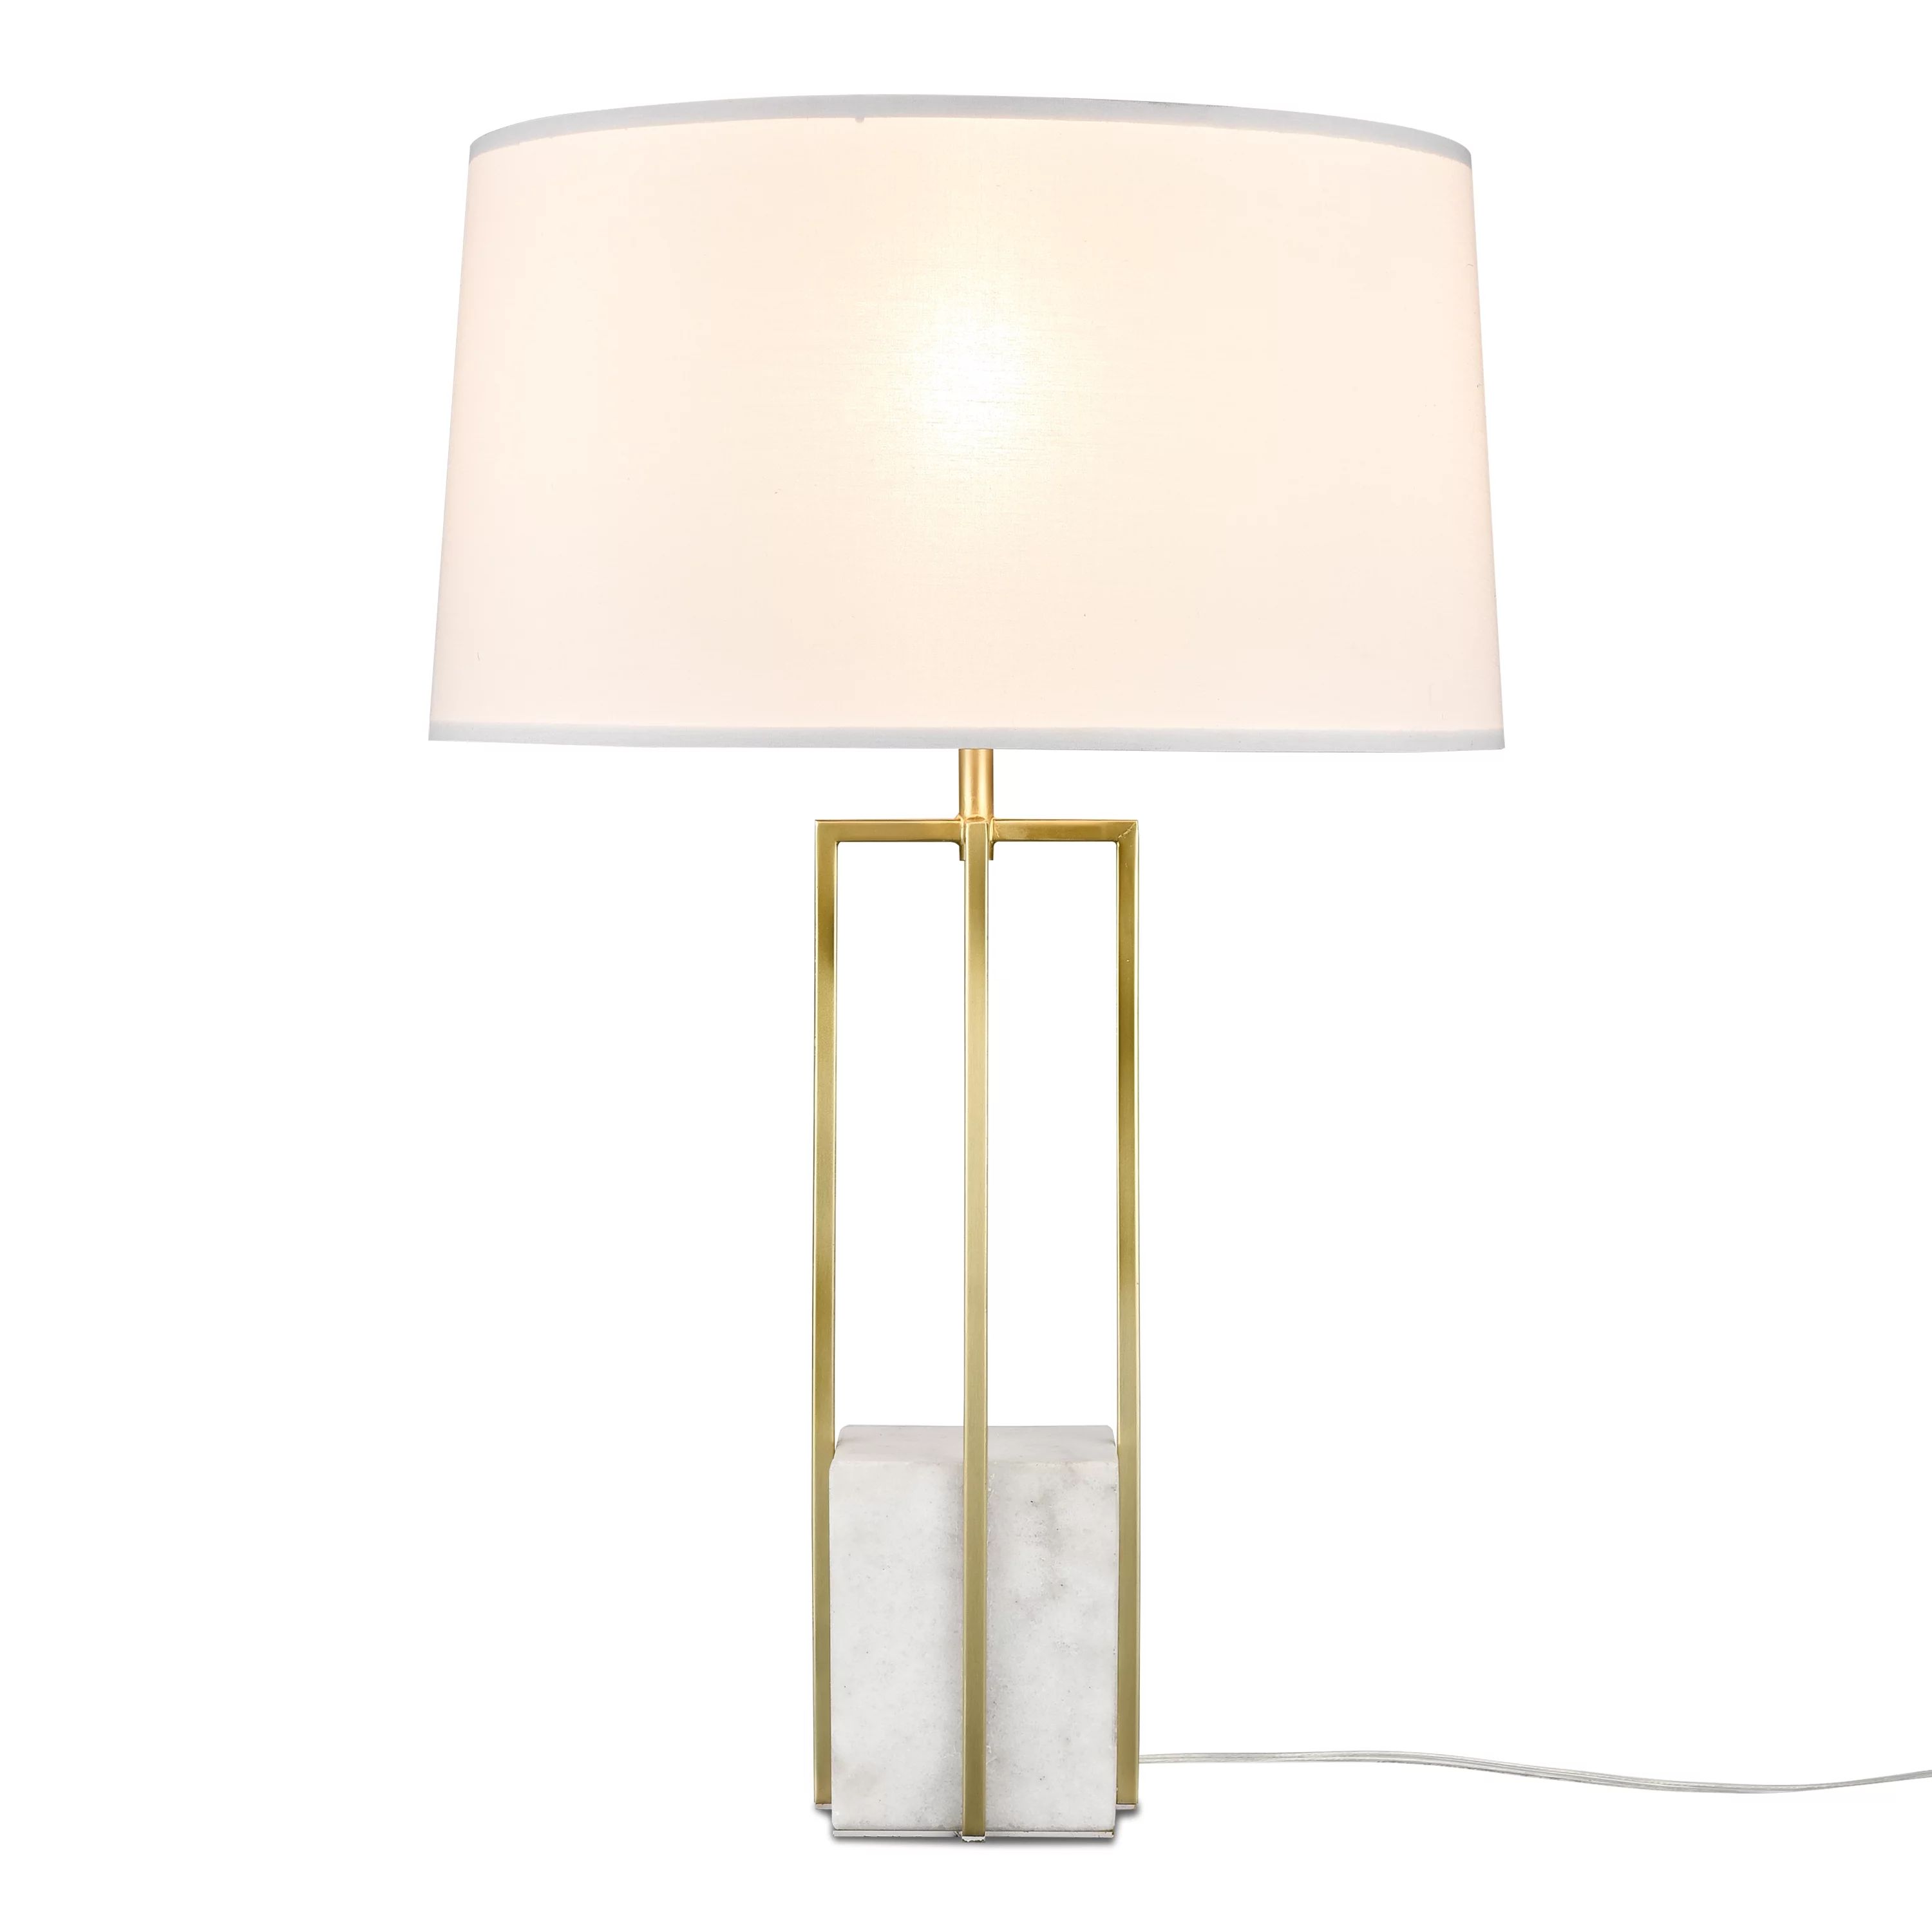 Light Society Peter Table Lamp in Brass/White | Walmart (US)